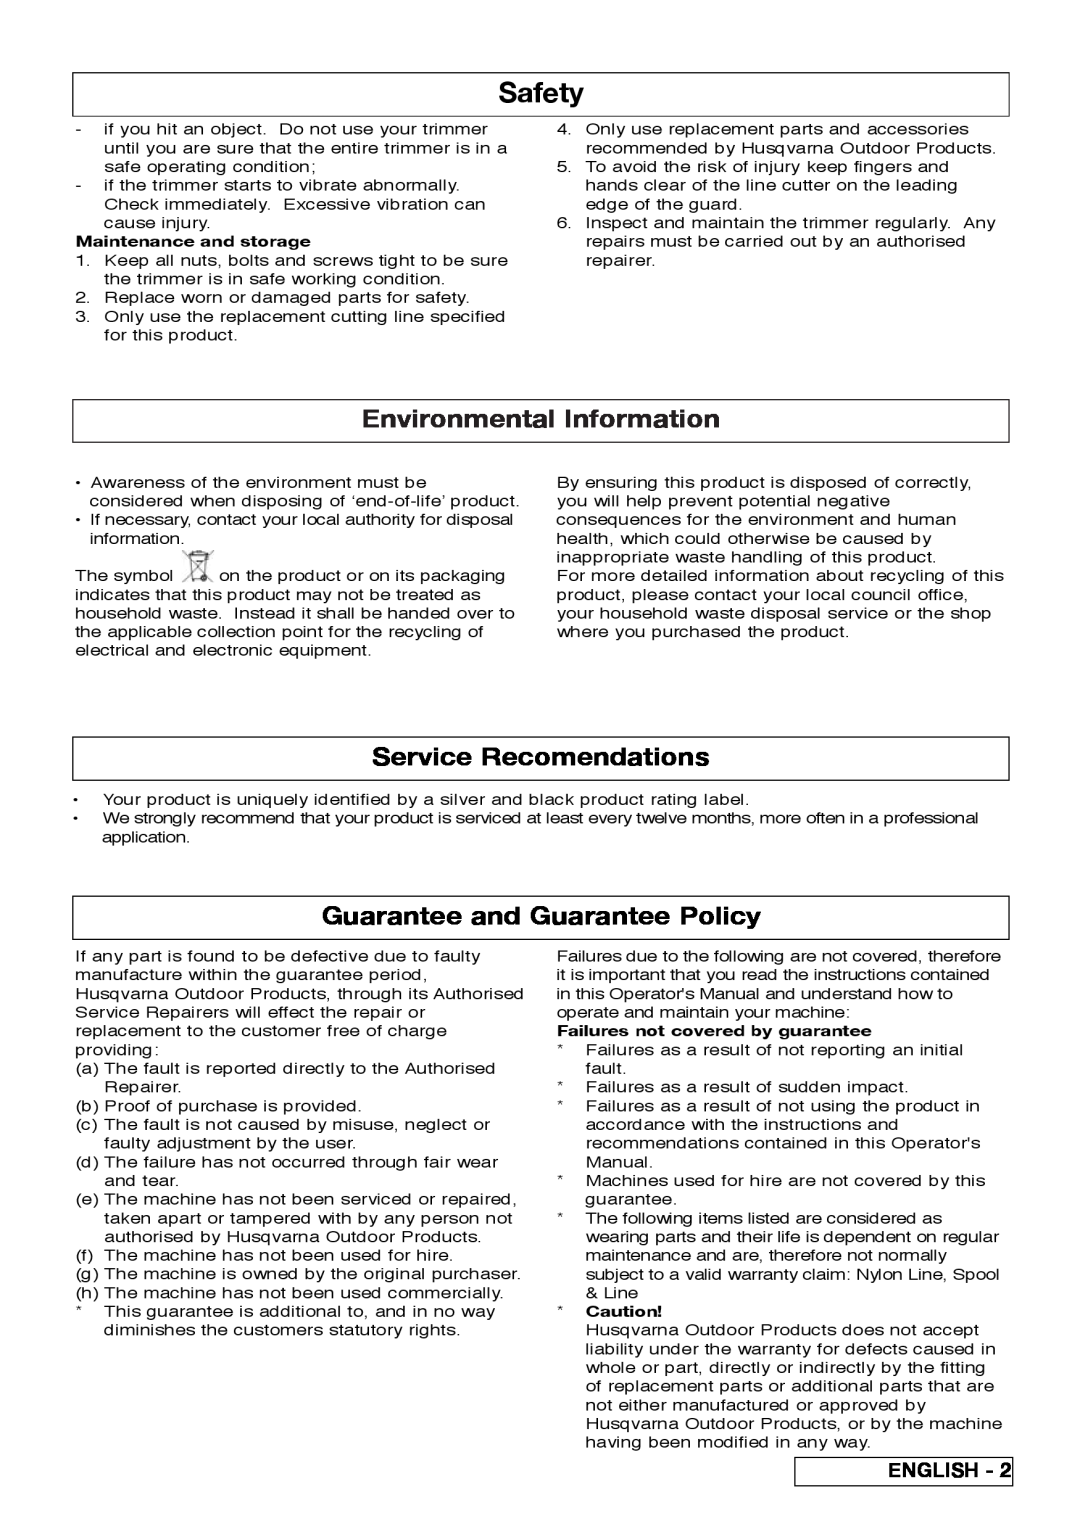 Flymo 800/1000 manual Environmental Information, Service Recomendations, Guarantee and Guarantee Policy, Safety, English 